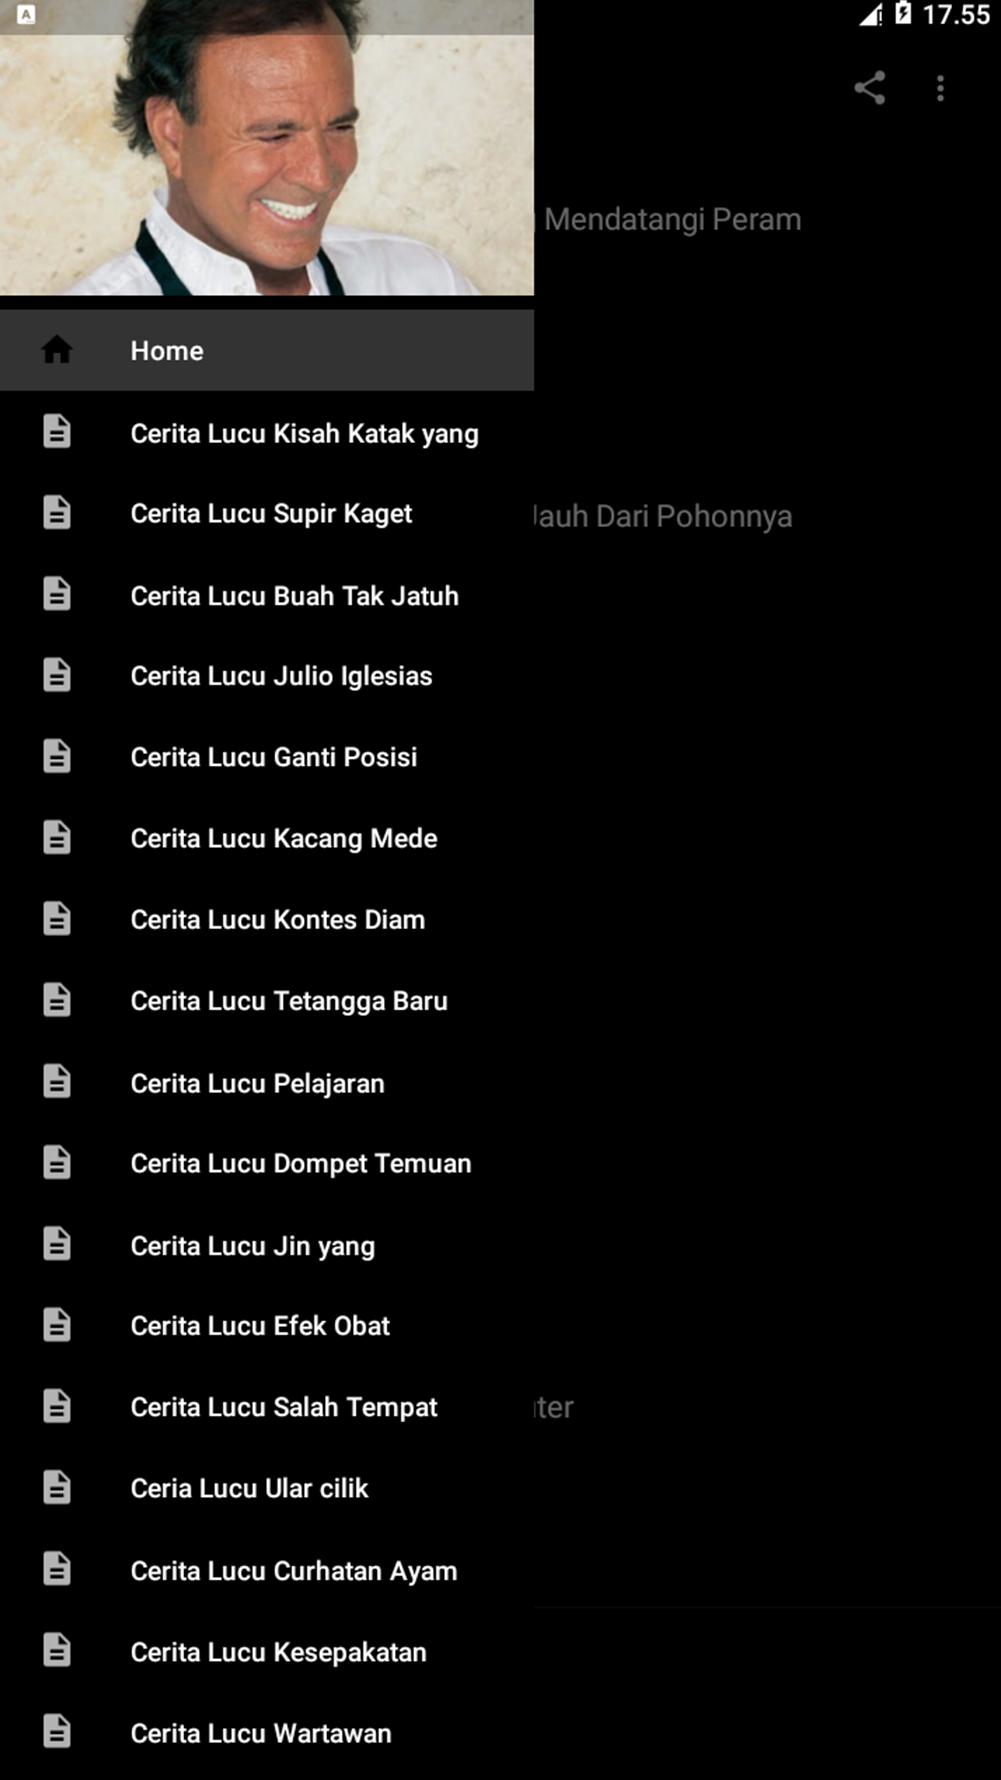 100 Cerita Lucu Bikin Ngakak 2019 For Android Apk Download